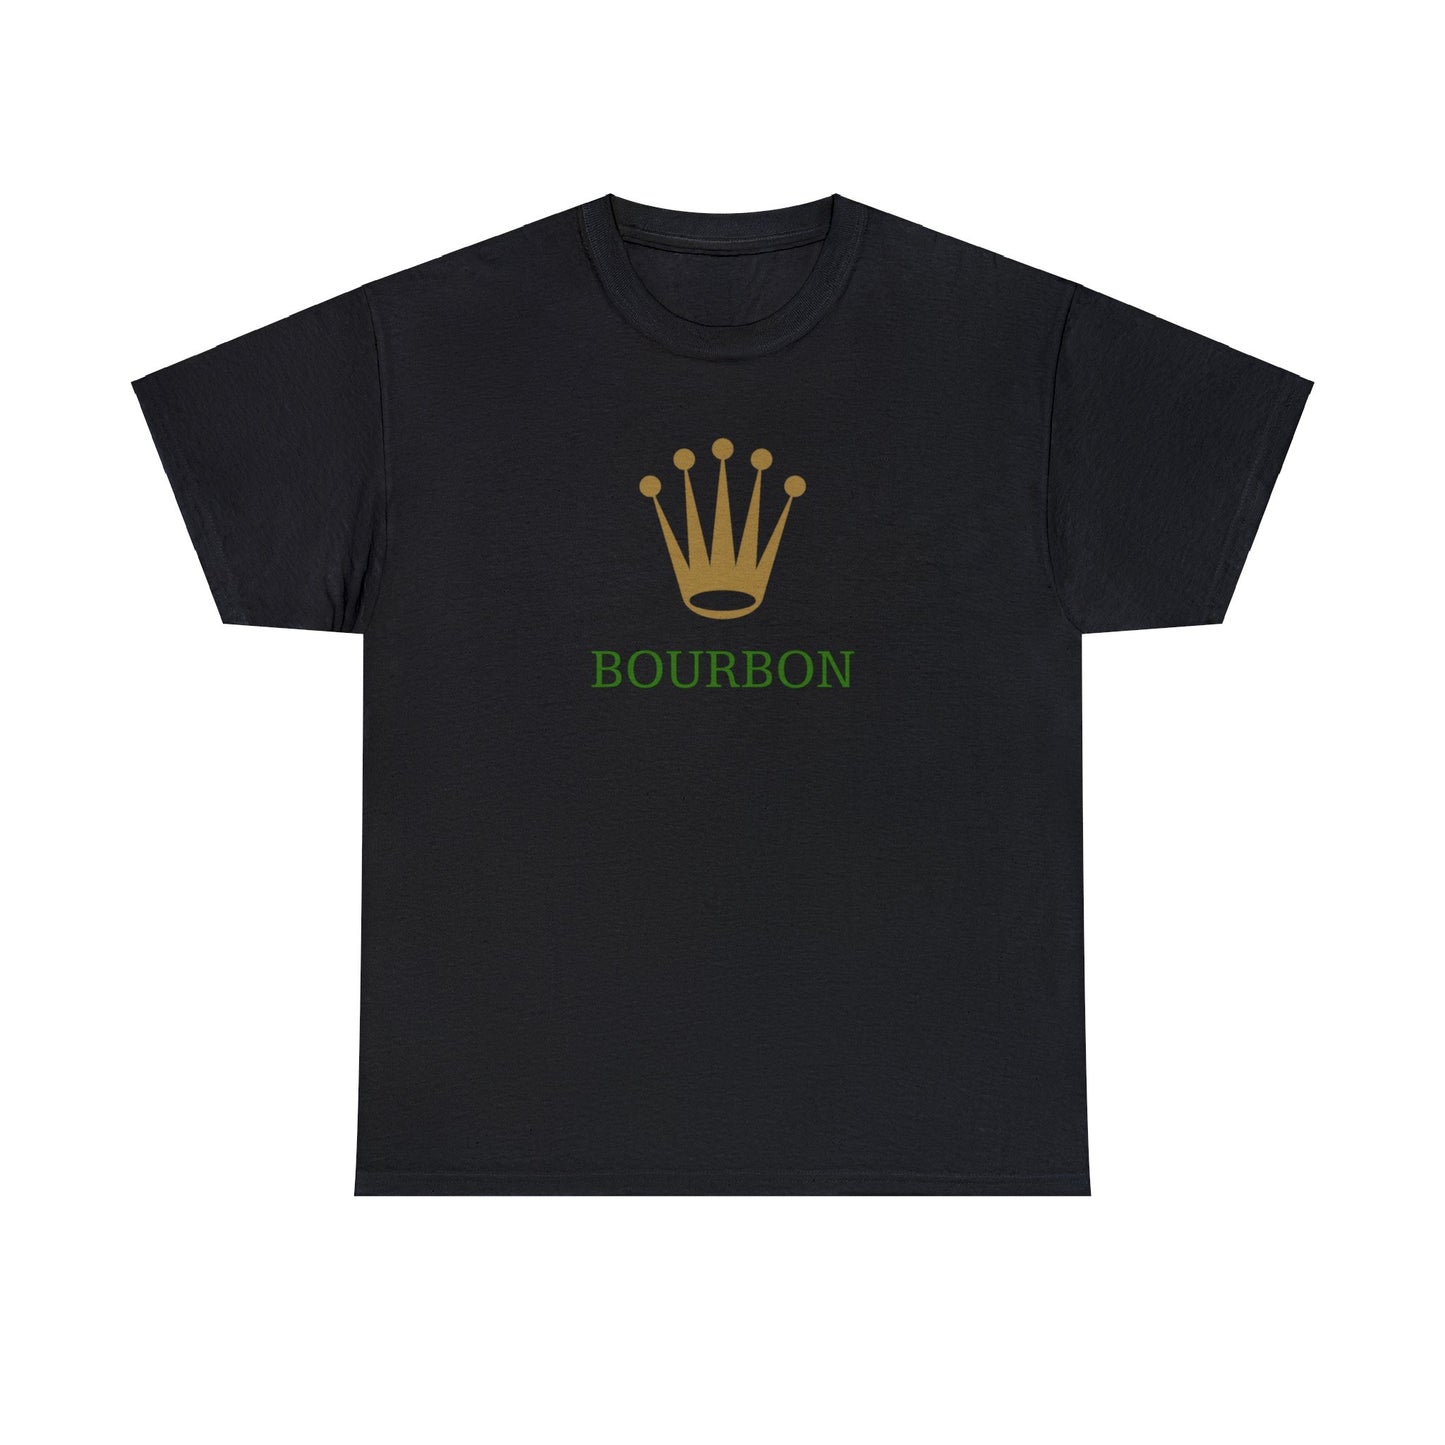 Bourbon is King